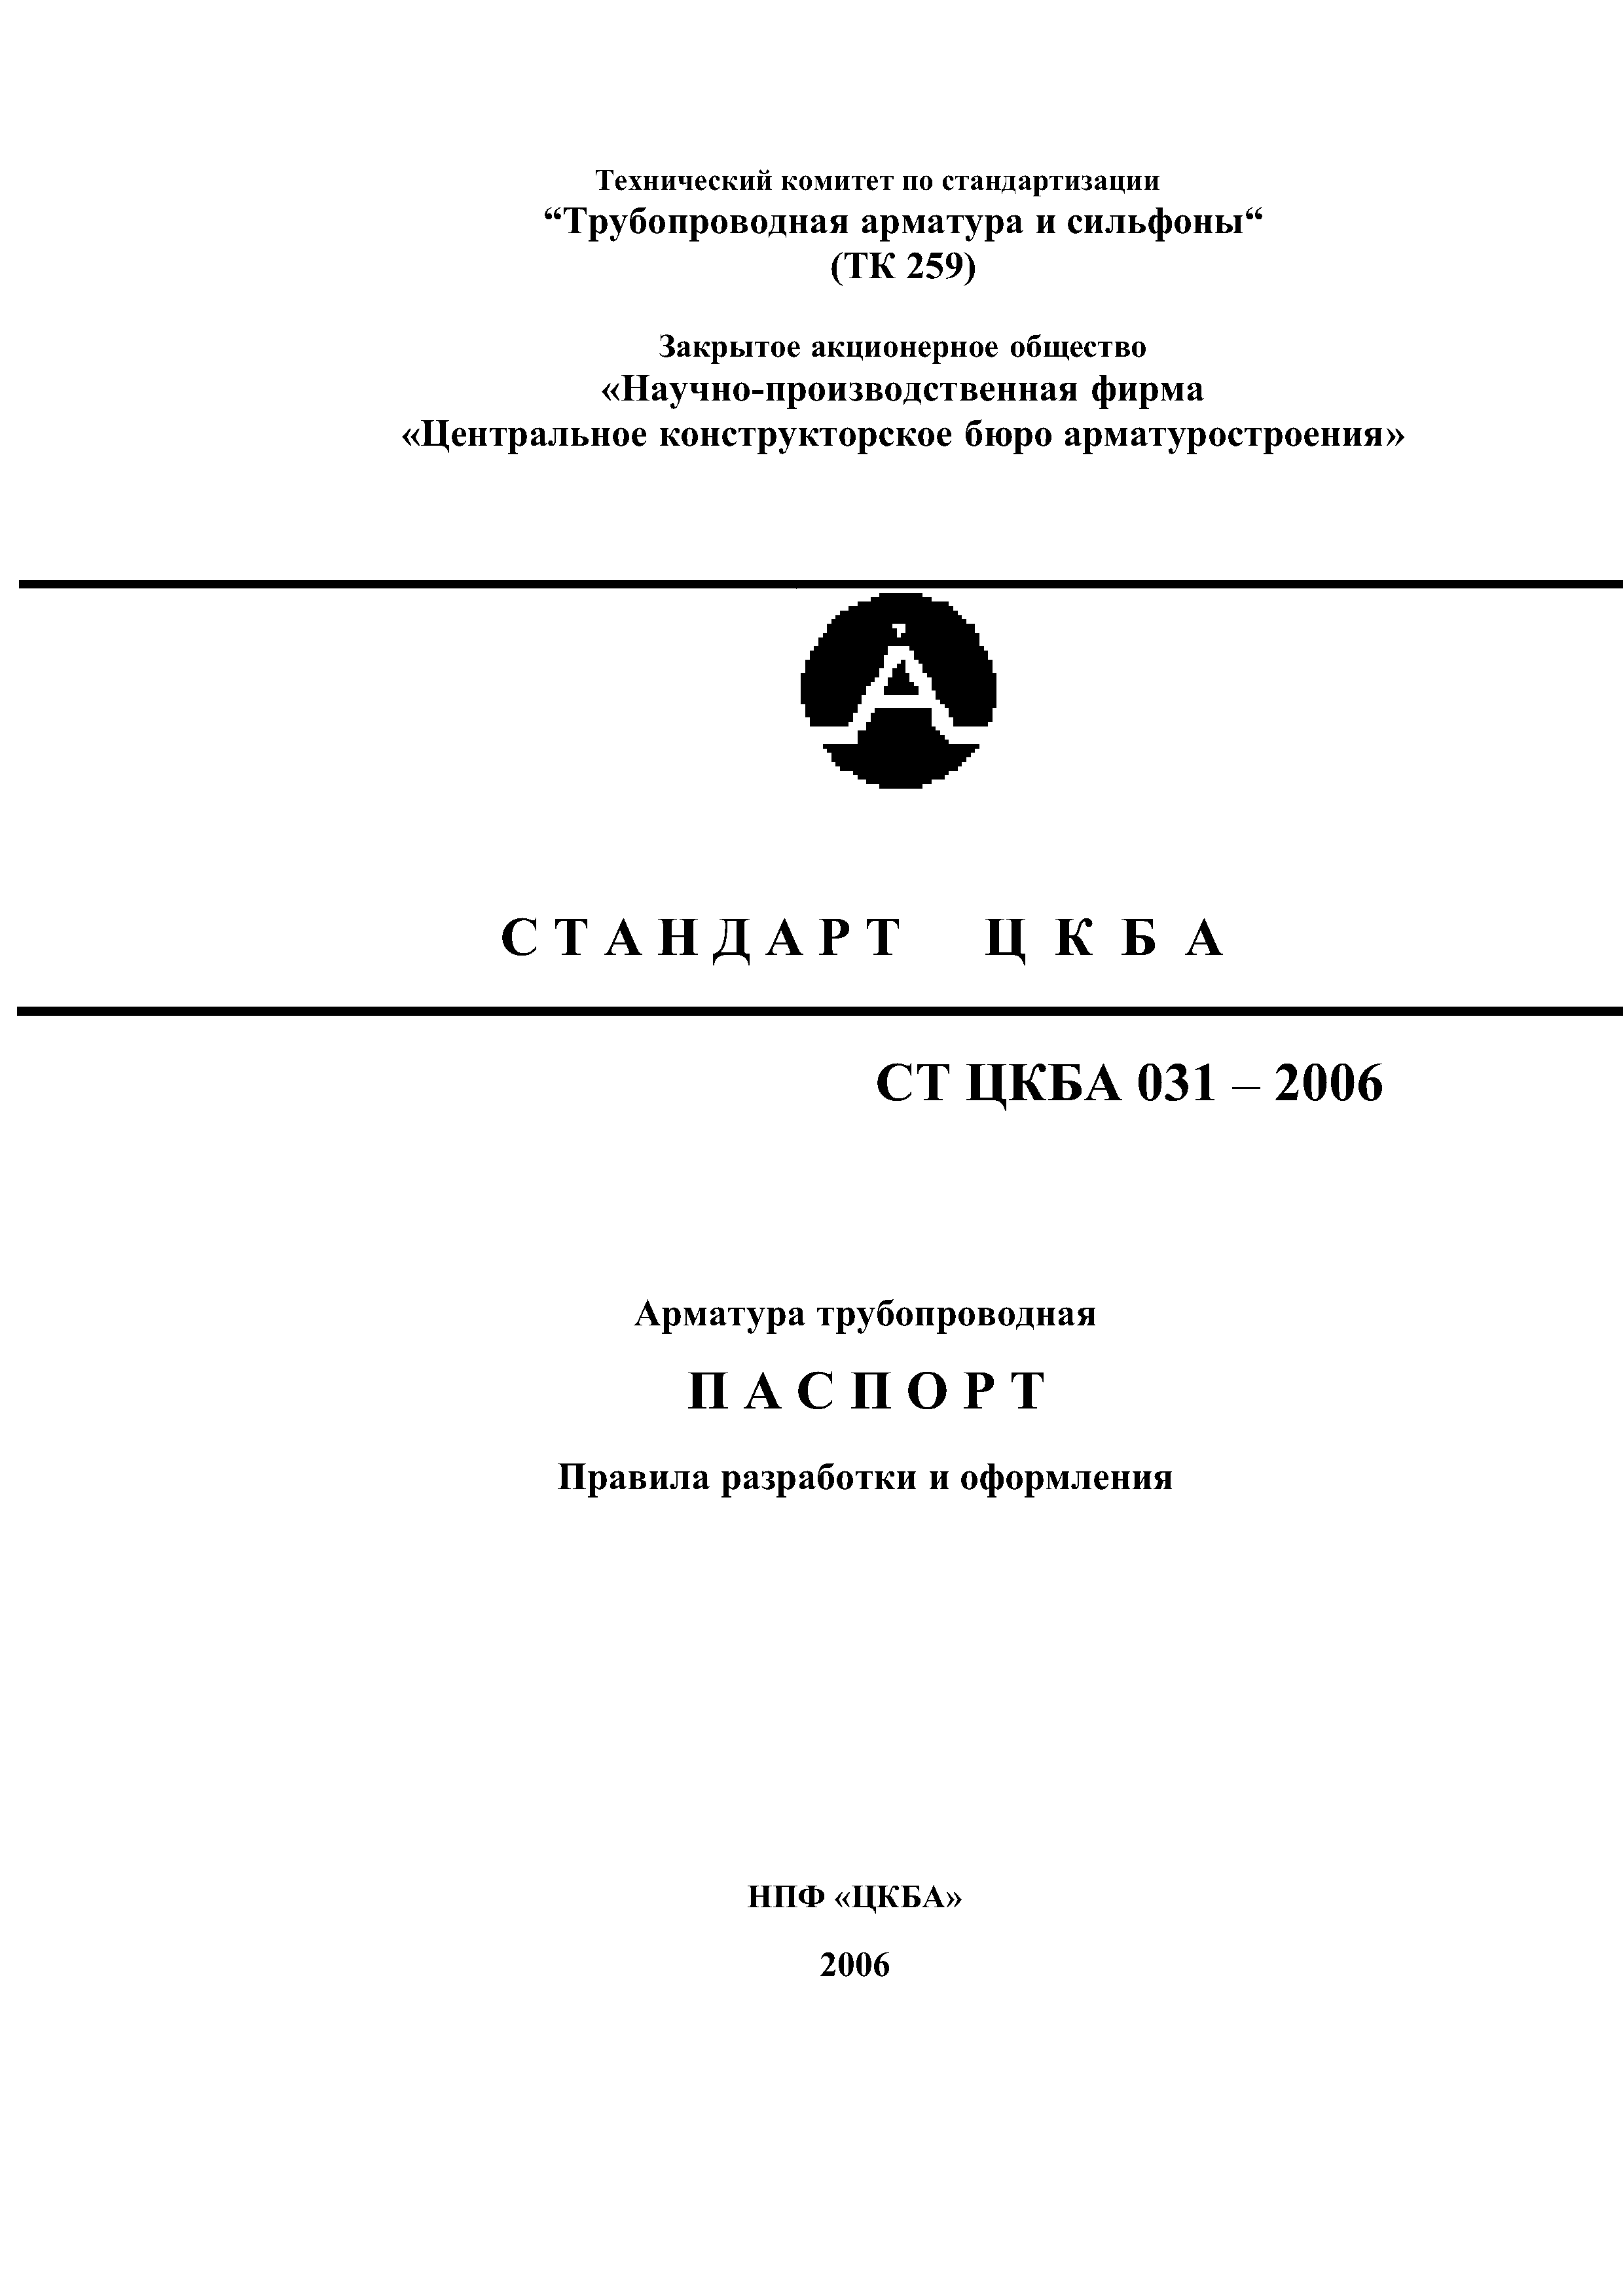 СТ ЦКБА 031-2006